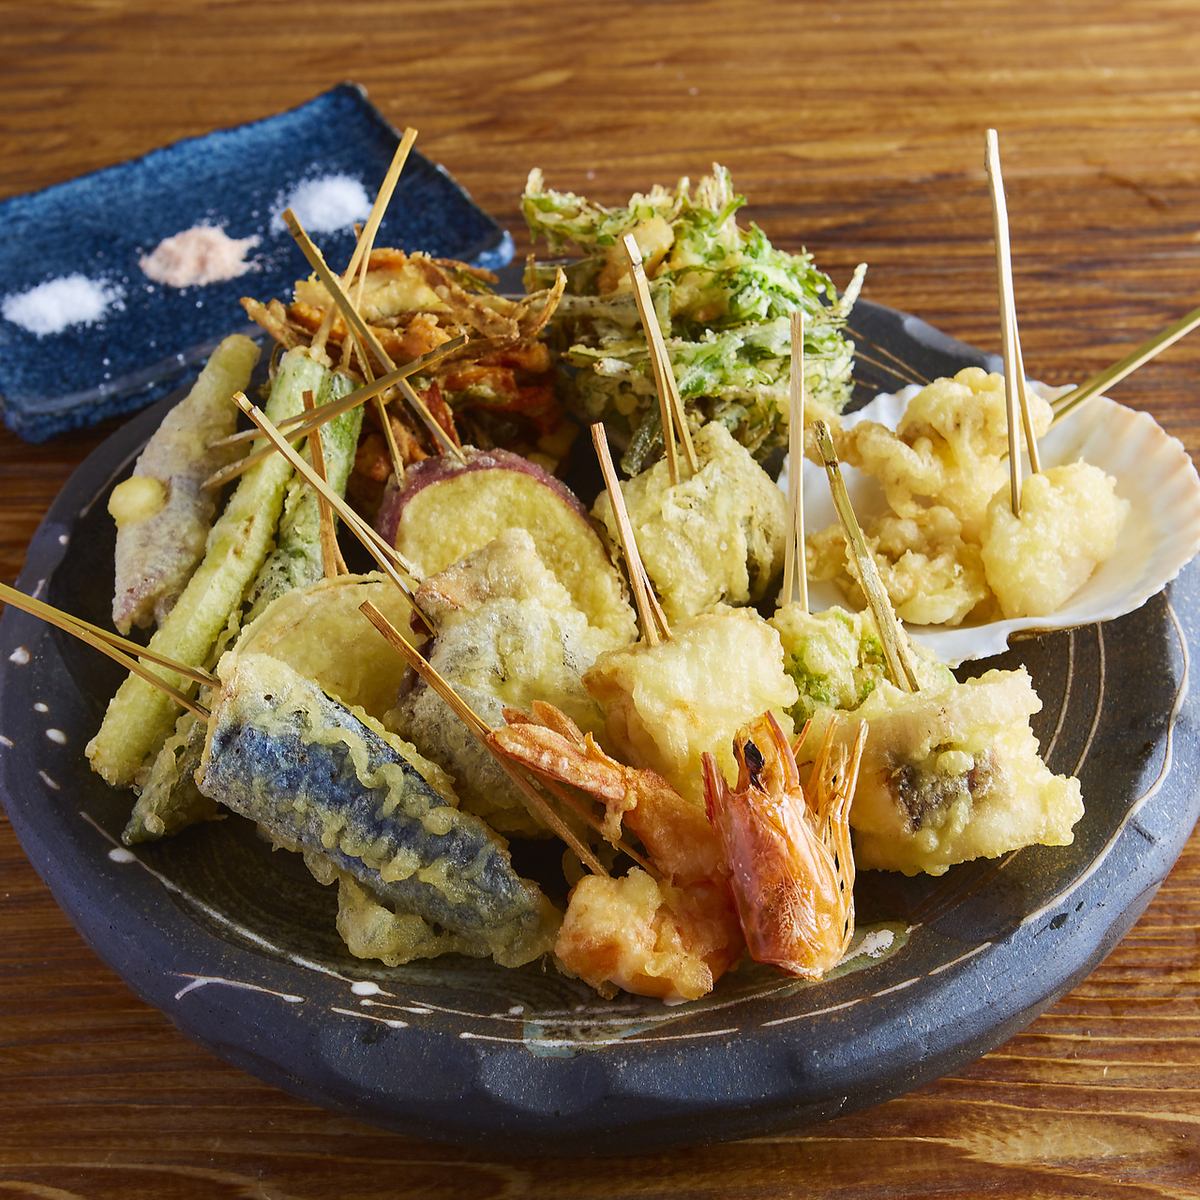 You can easily enjoy a new style of tempura